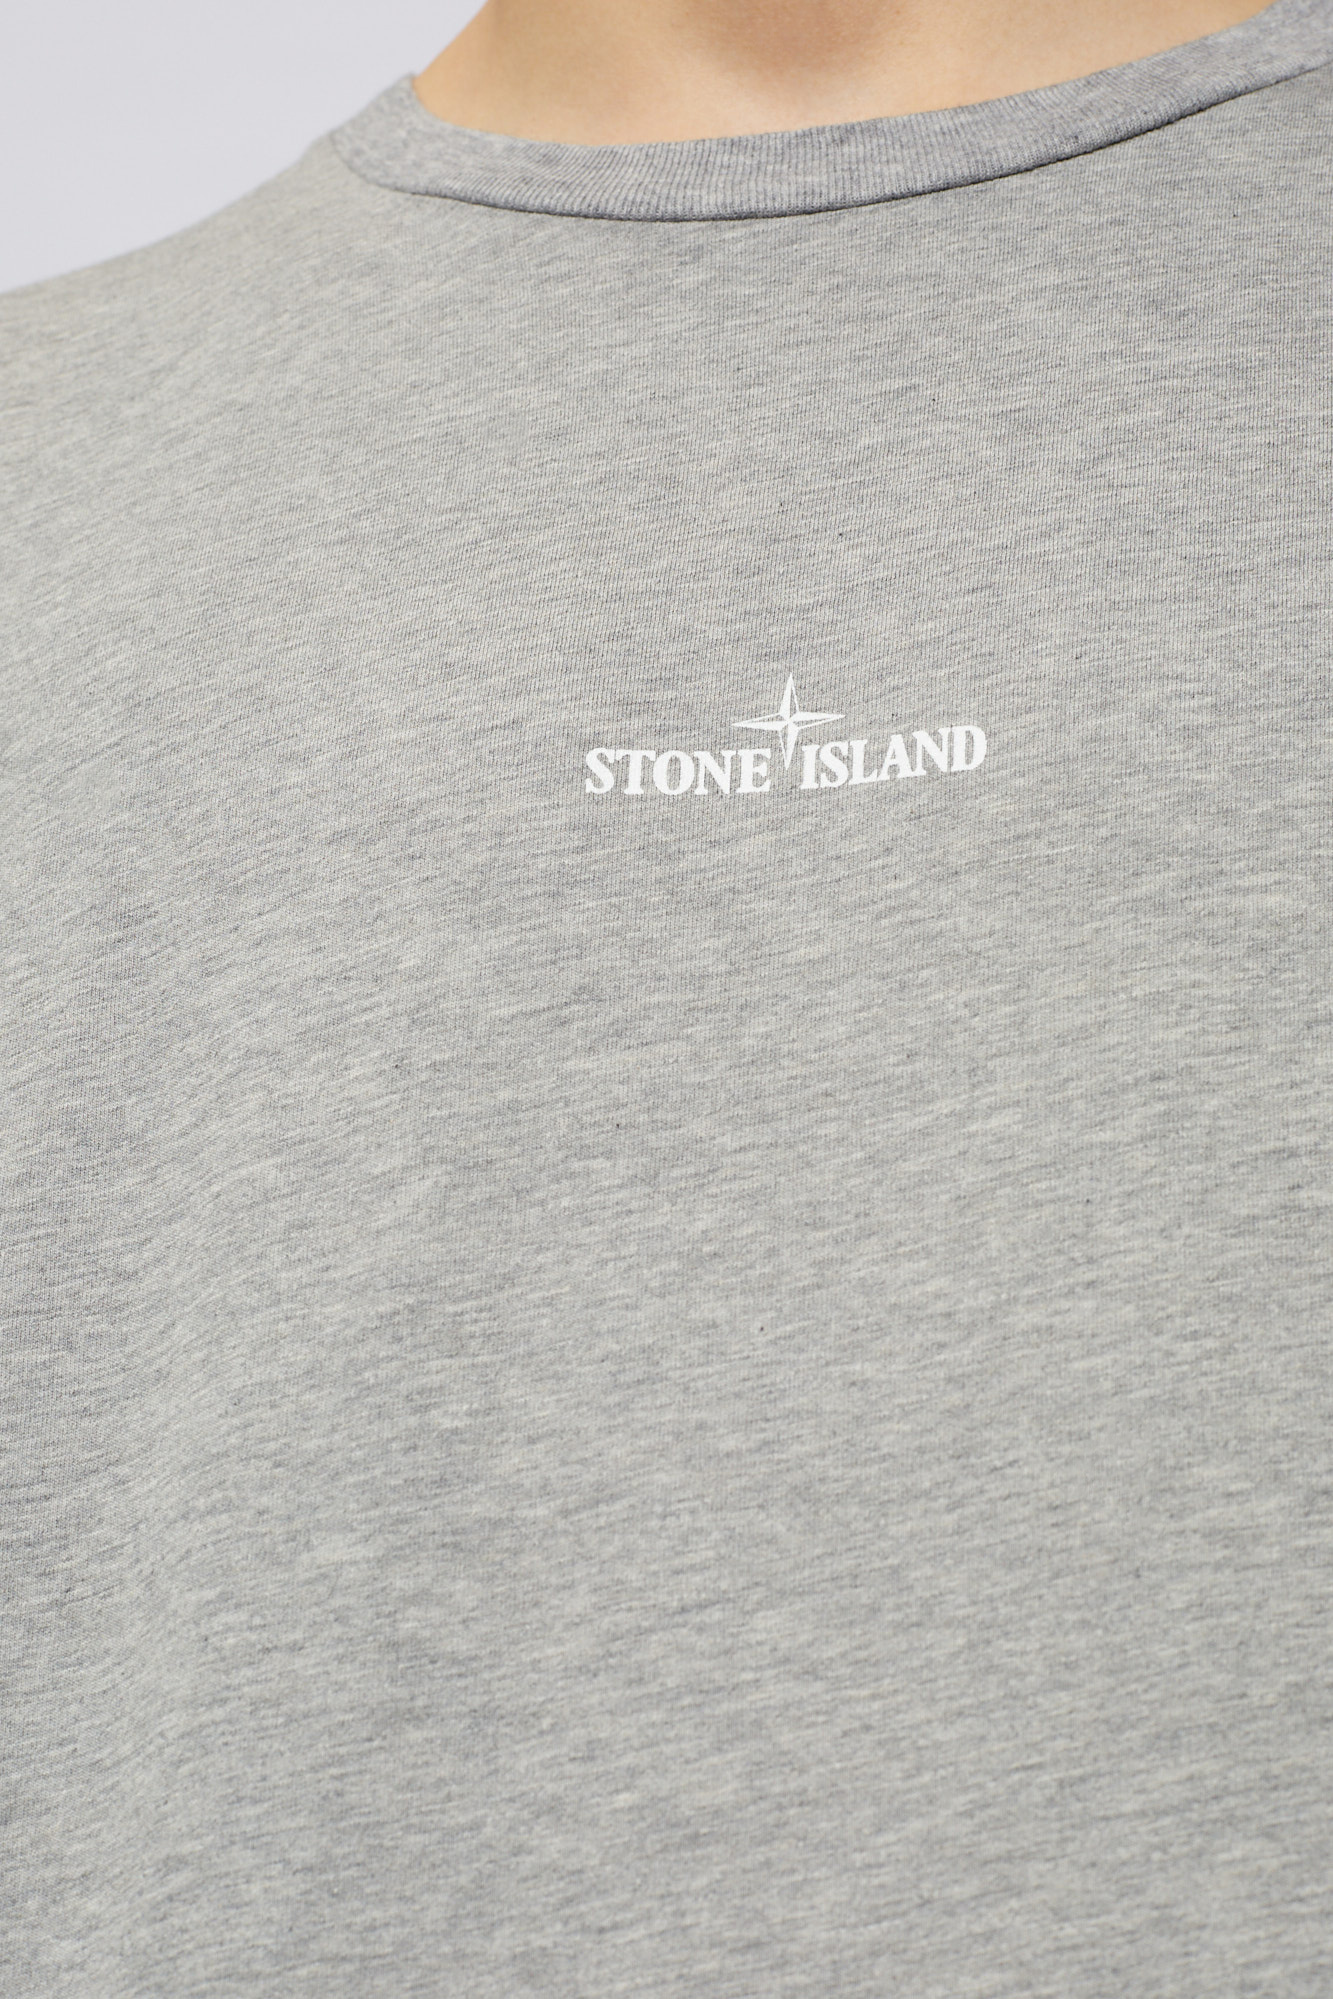 Stone Island T-shirt Play with logo